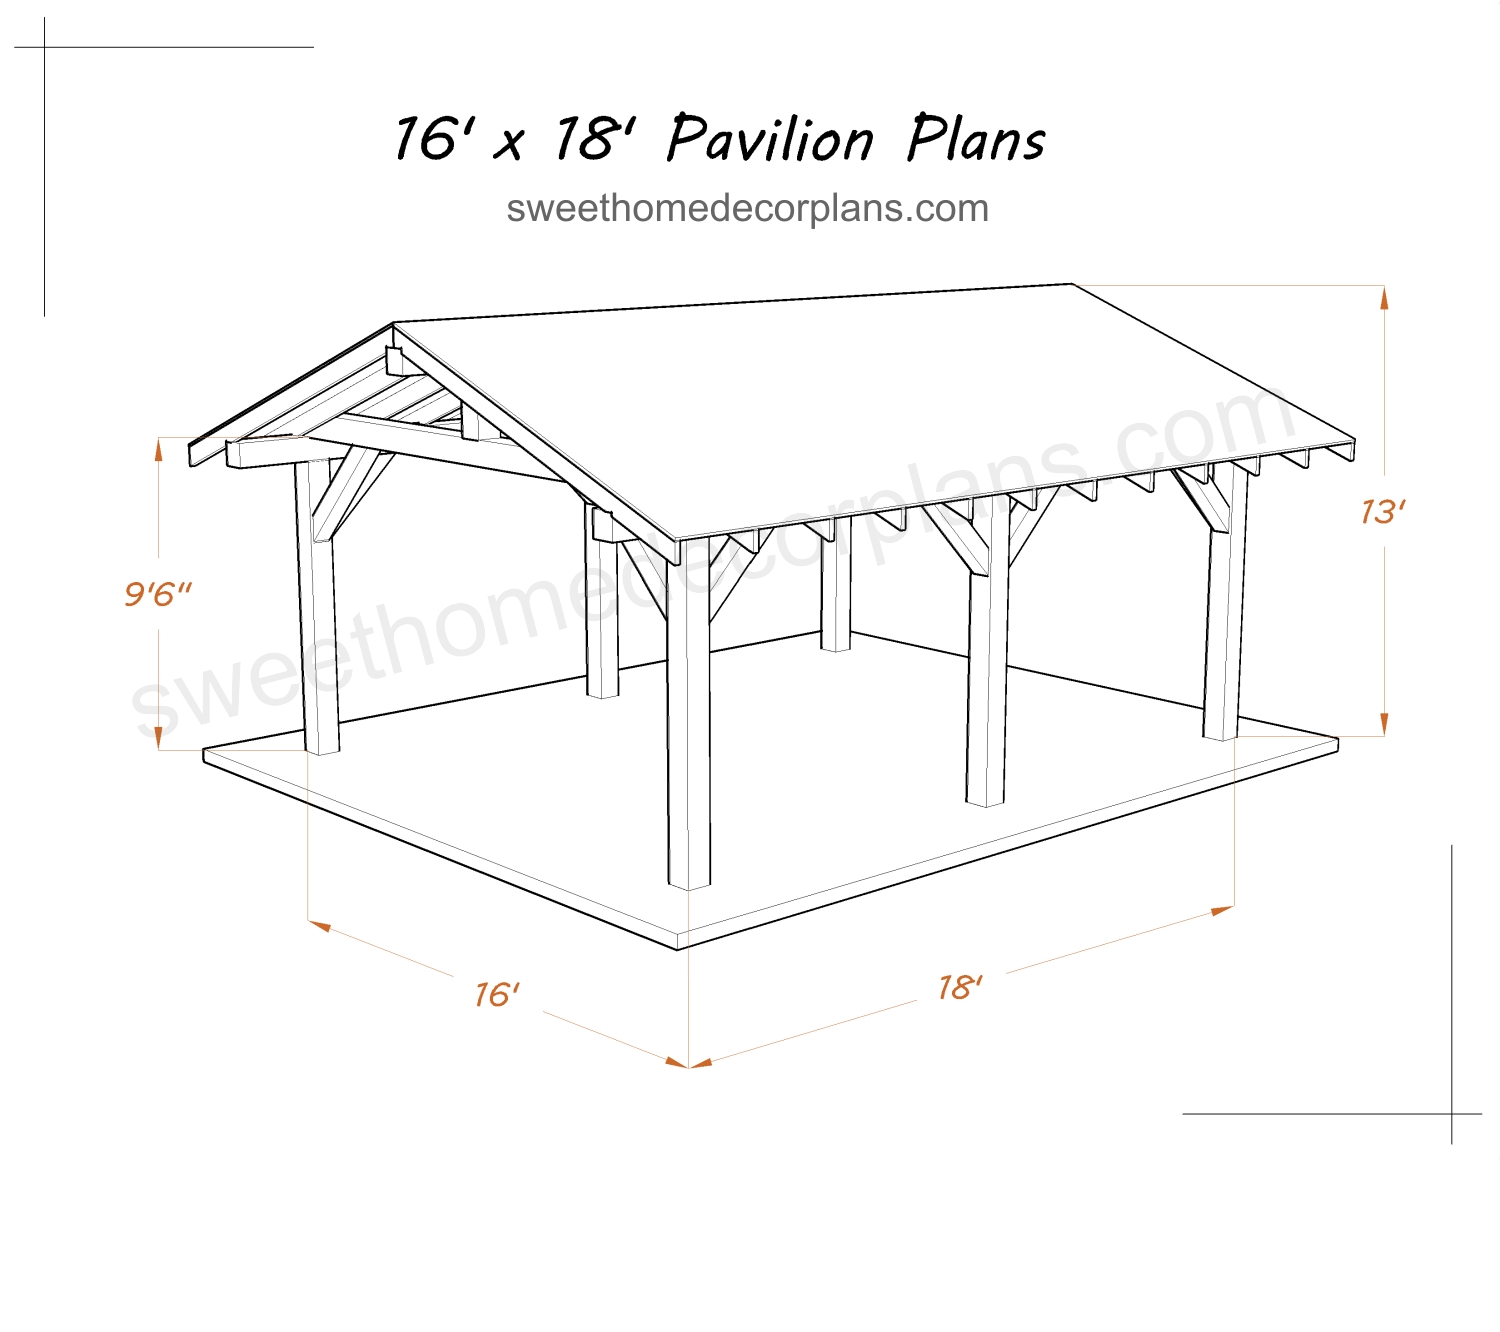 Diy-16-х-18-gable-pavilion-plans-carport-patio-gazebo